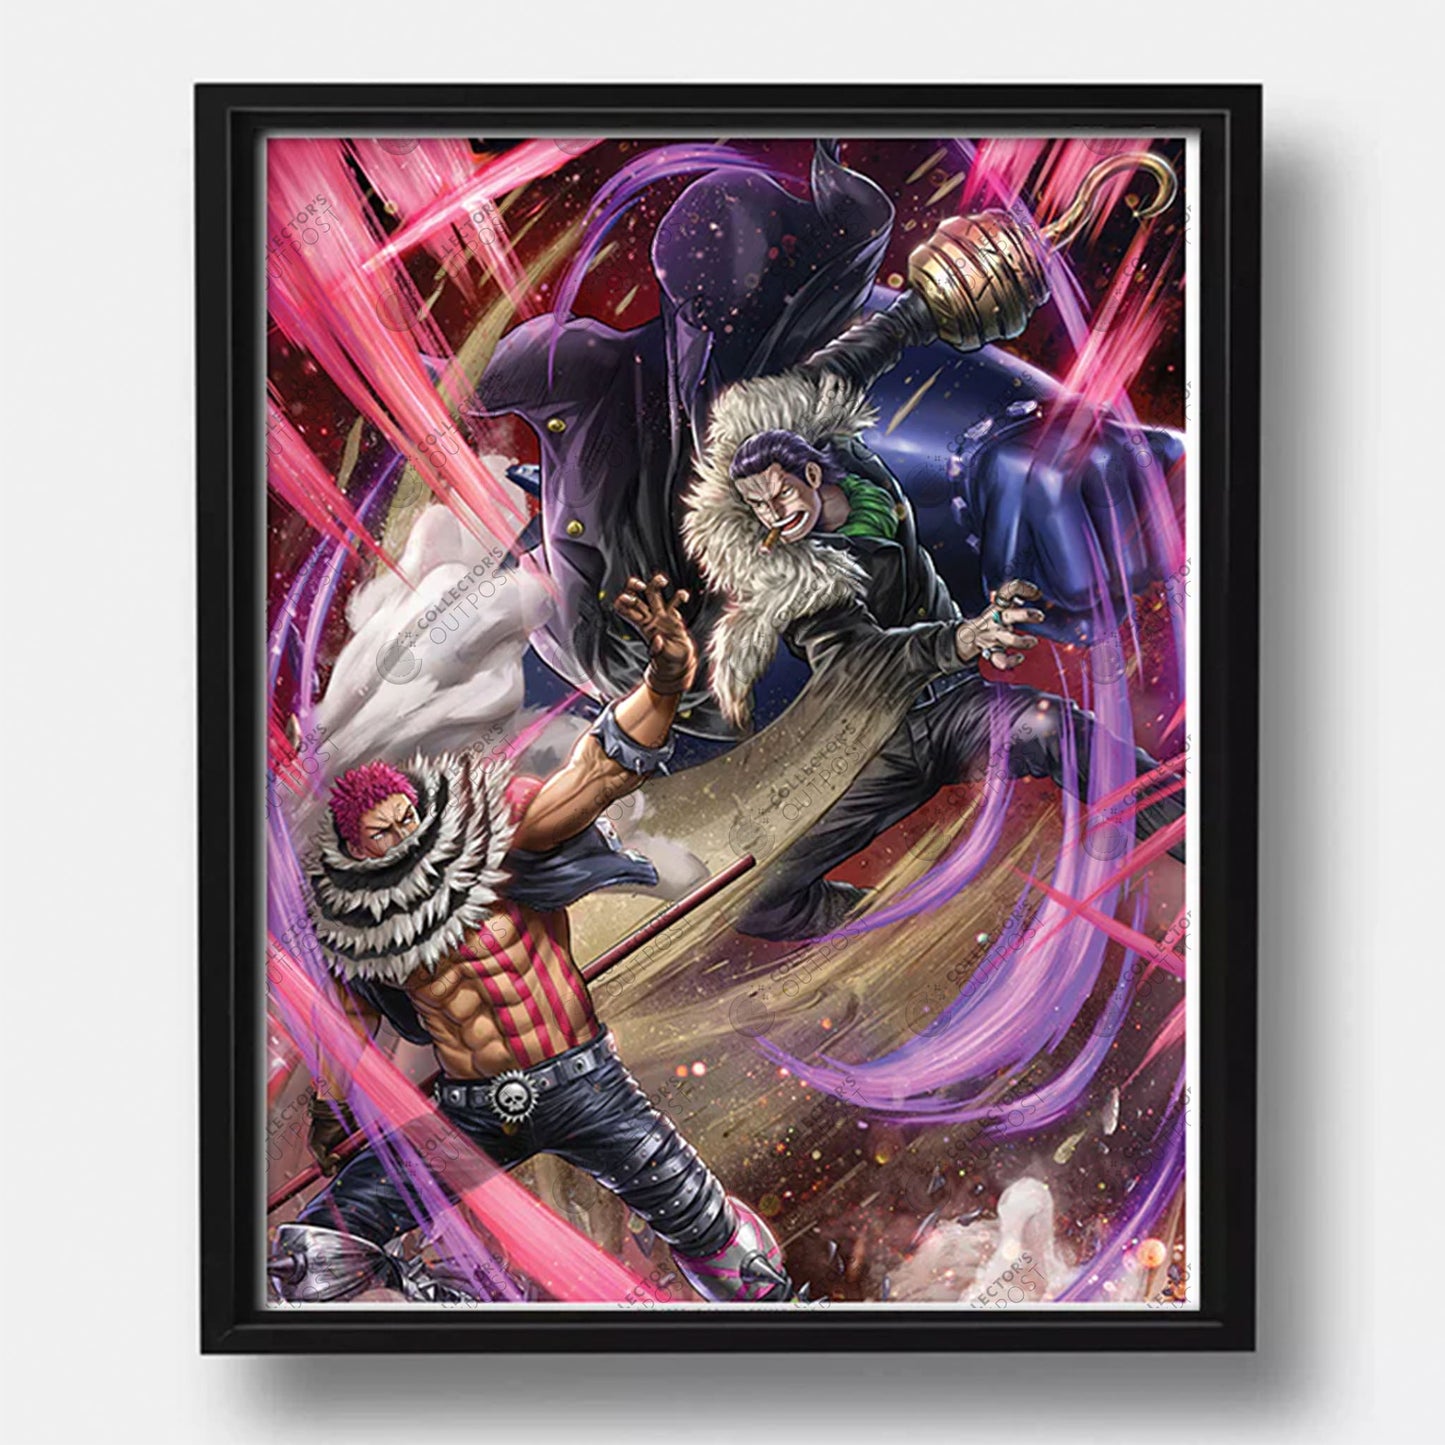 Charlotte Katakuri - One Piece v.2 | Art Board Print